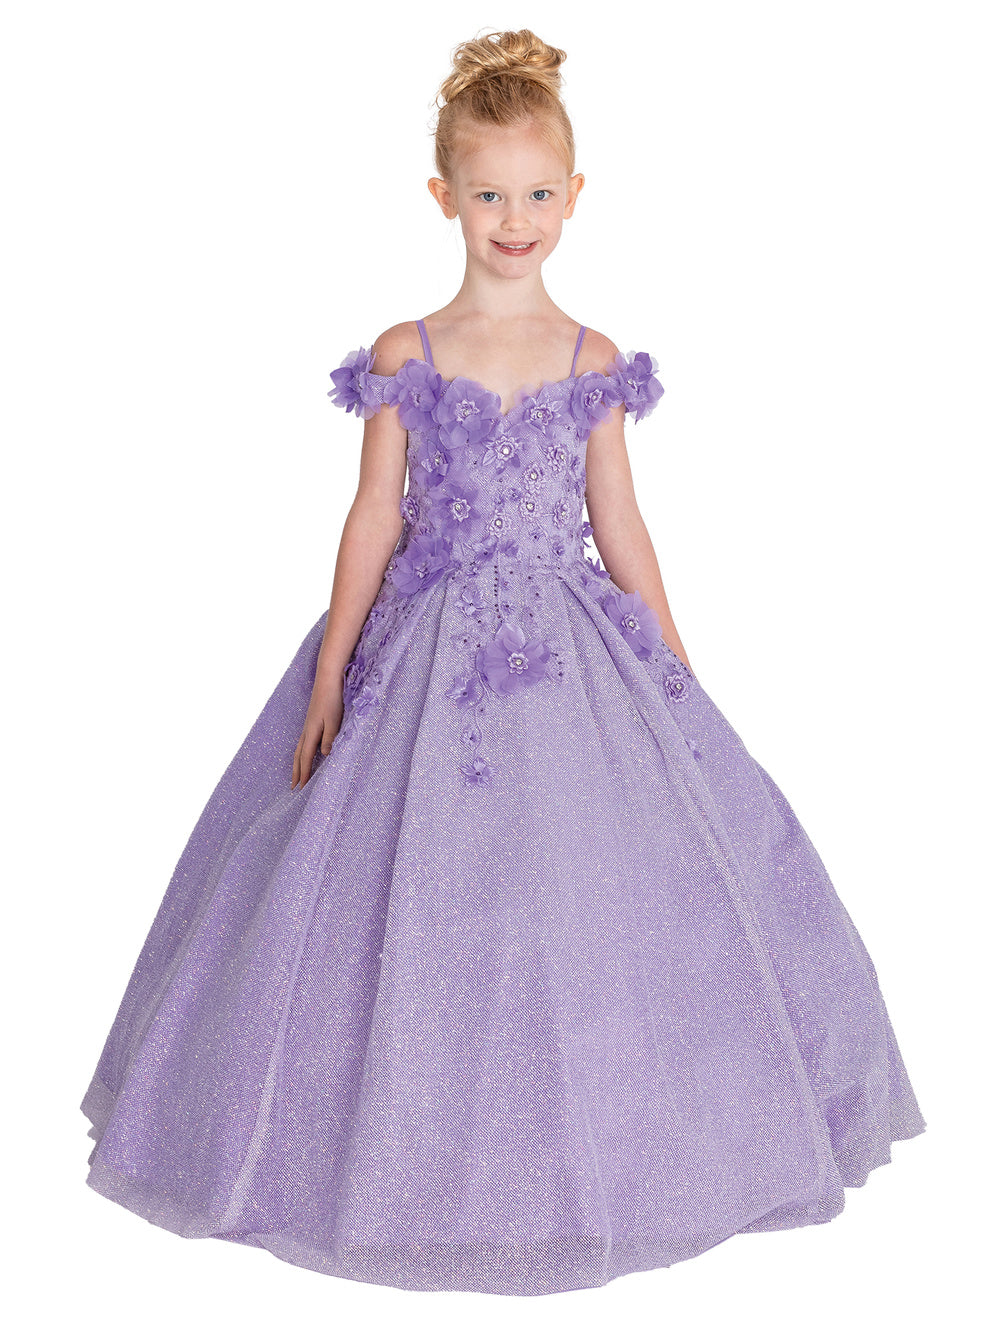 DQ K758 Size 2 Lilac Girls Off the Shoulder Glitter Pageant Dress 3D Flower Corset